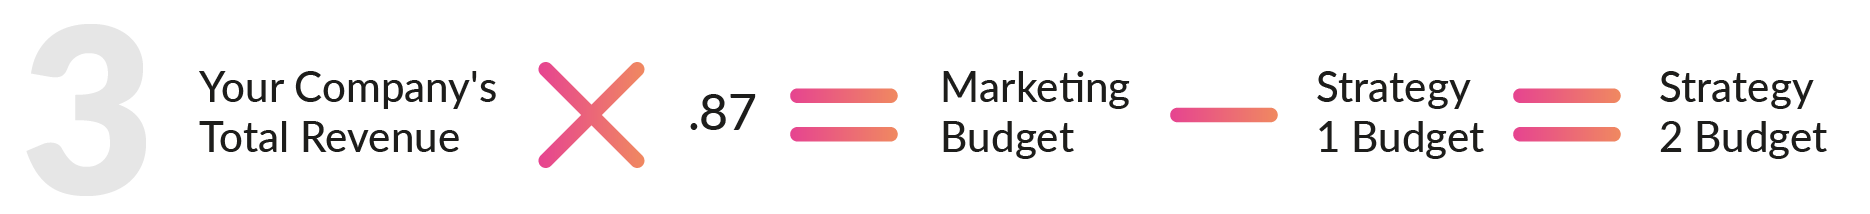 mkt_budget_strategy_3